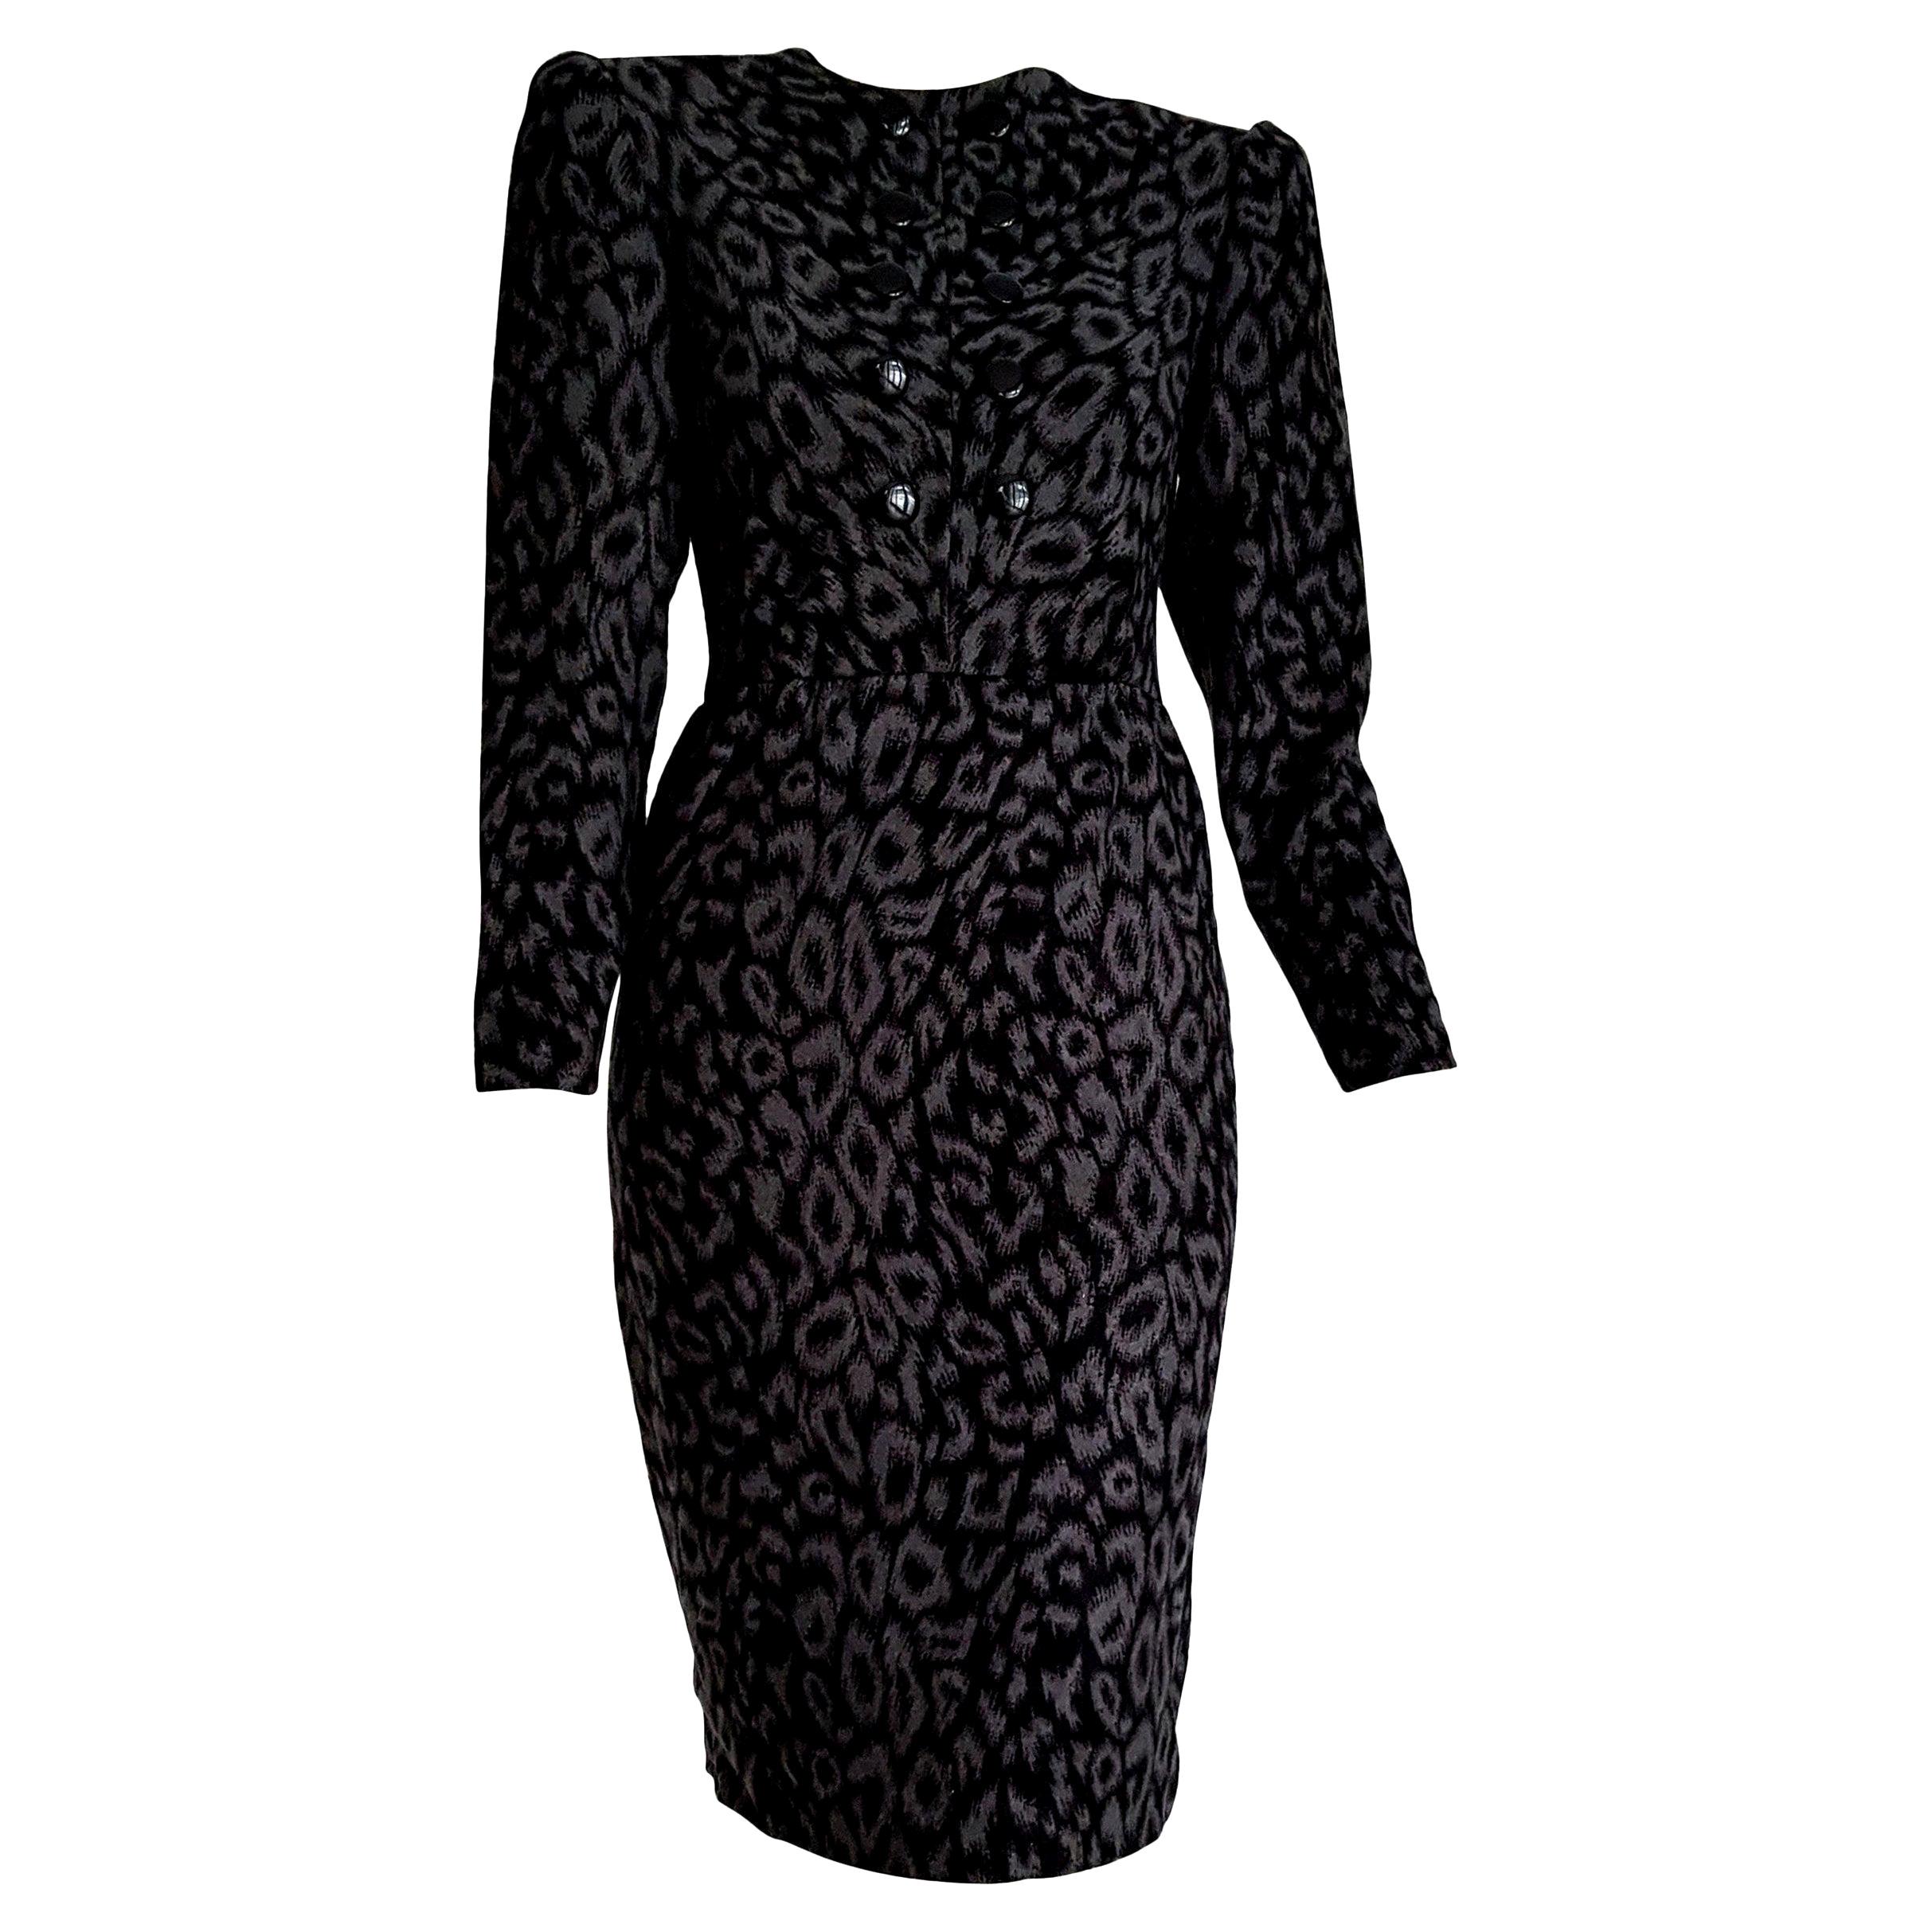 VALENTINO "New" Black and Gray Leopard Print Cashmere Dress - Unworn For Sale